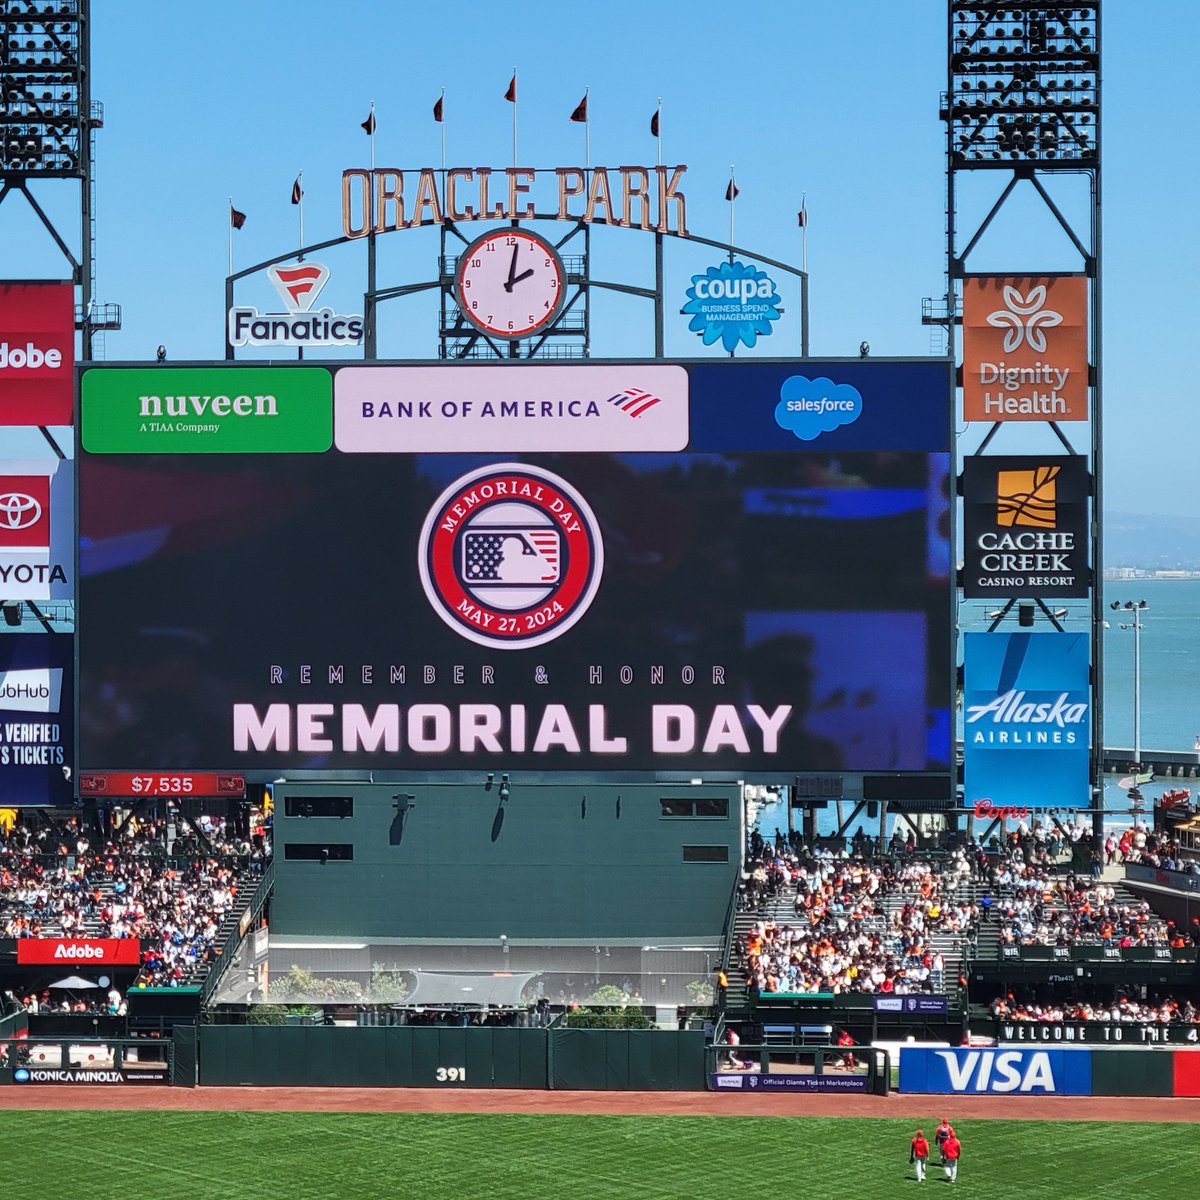 Play Ball !! ⚾️🇺🇸
#Phillies #SFGIANTS #OraclePark #MemorialDay